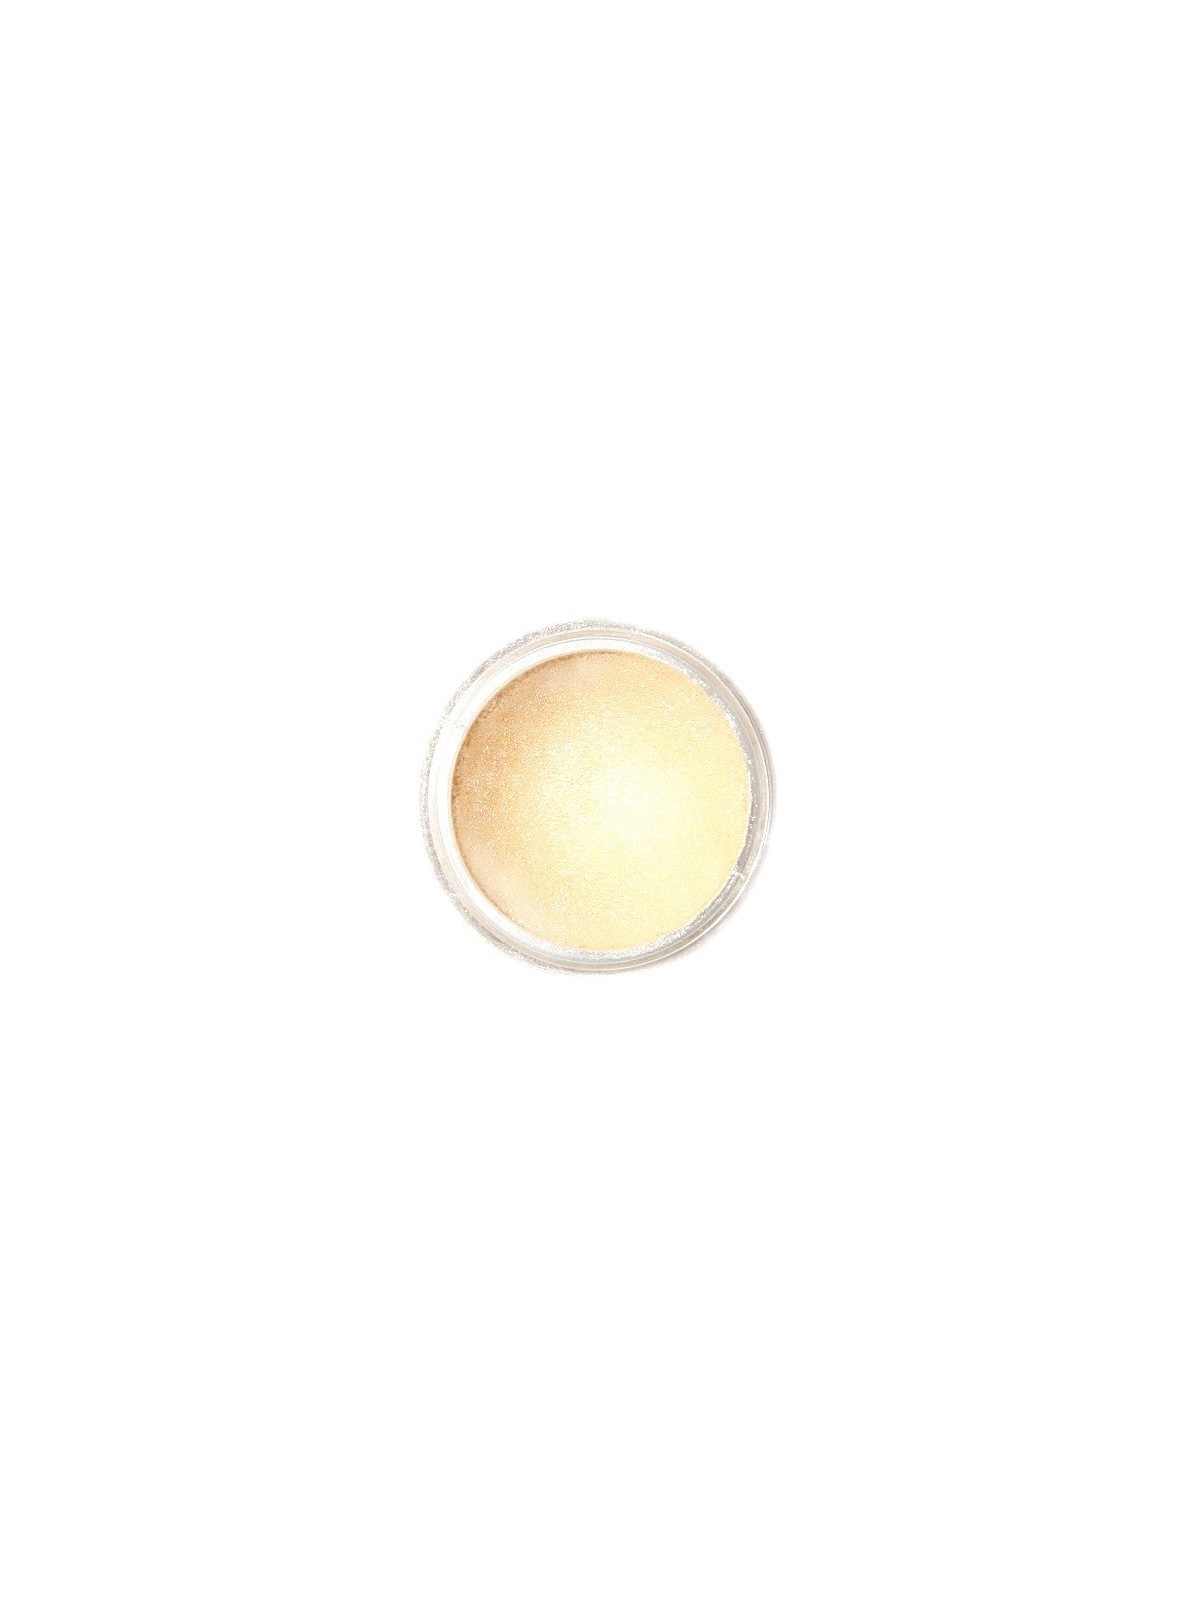 Decorative powder pearl color Fractal - Champagne Gold, Aranysárga (3 g)